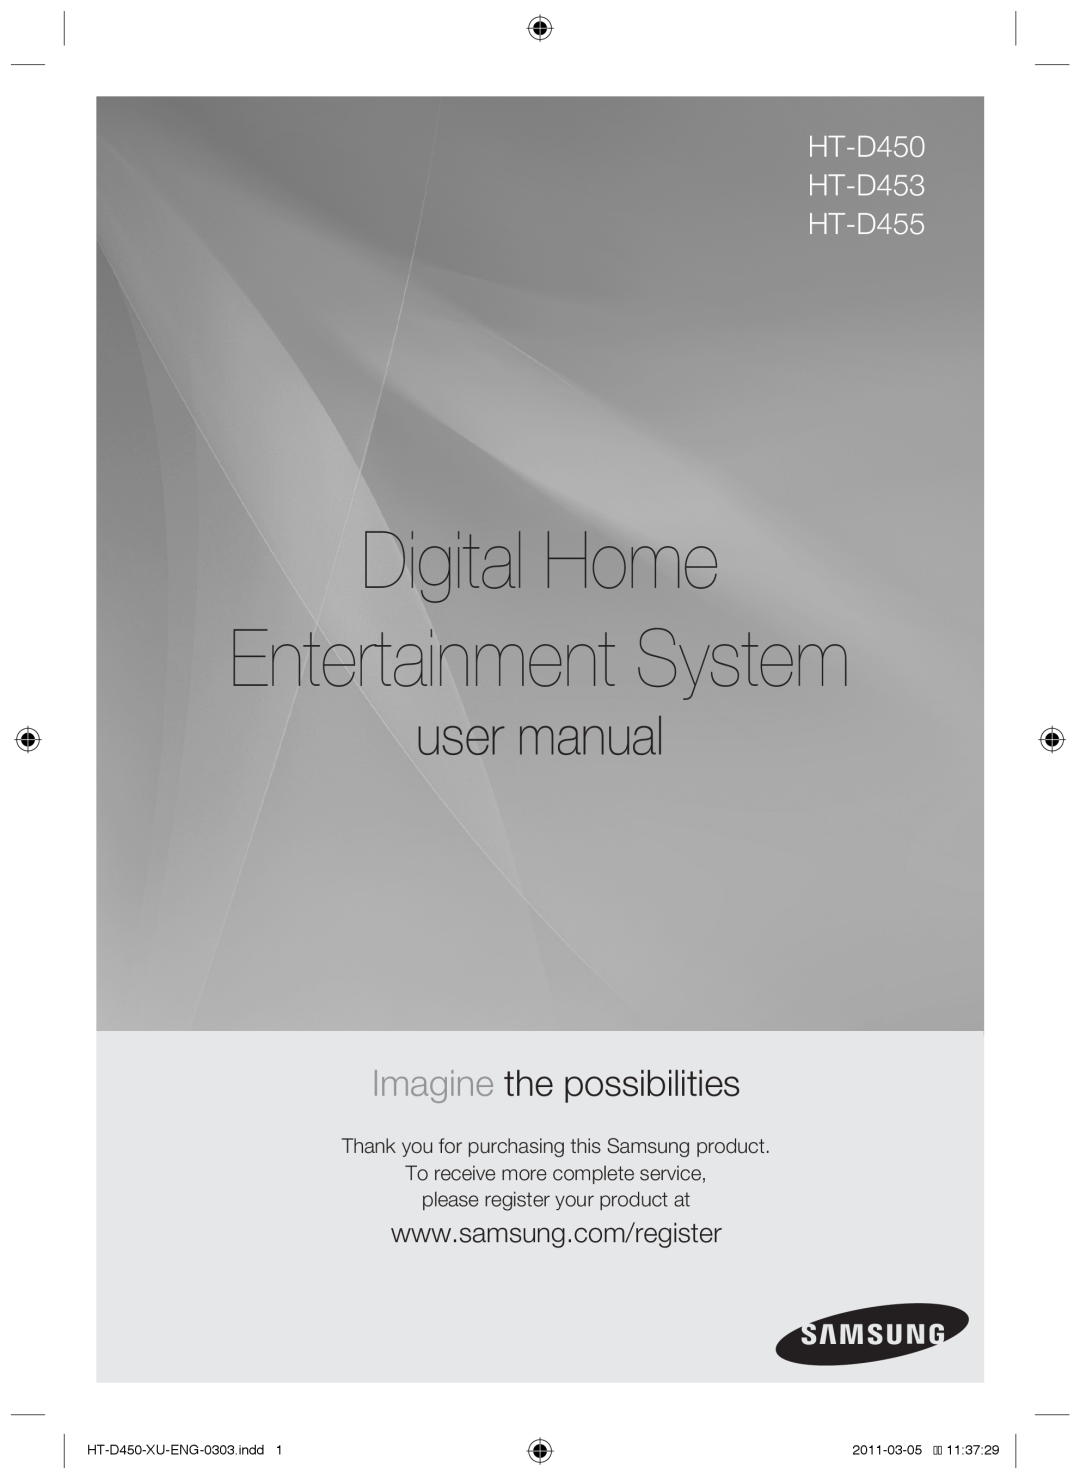 Samsung user manual Digital Home Entertainment System, Imagine the possibilities, HT-D450 HT-D453 HT-D455 